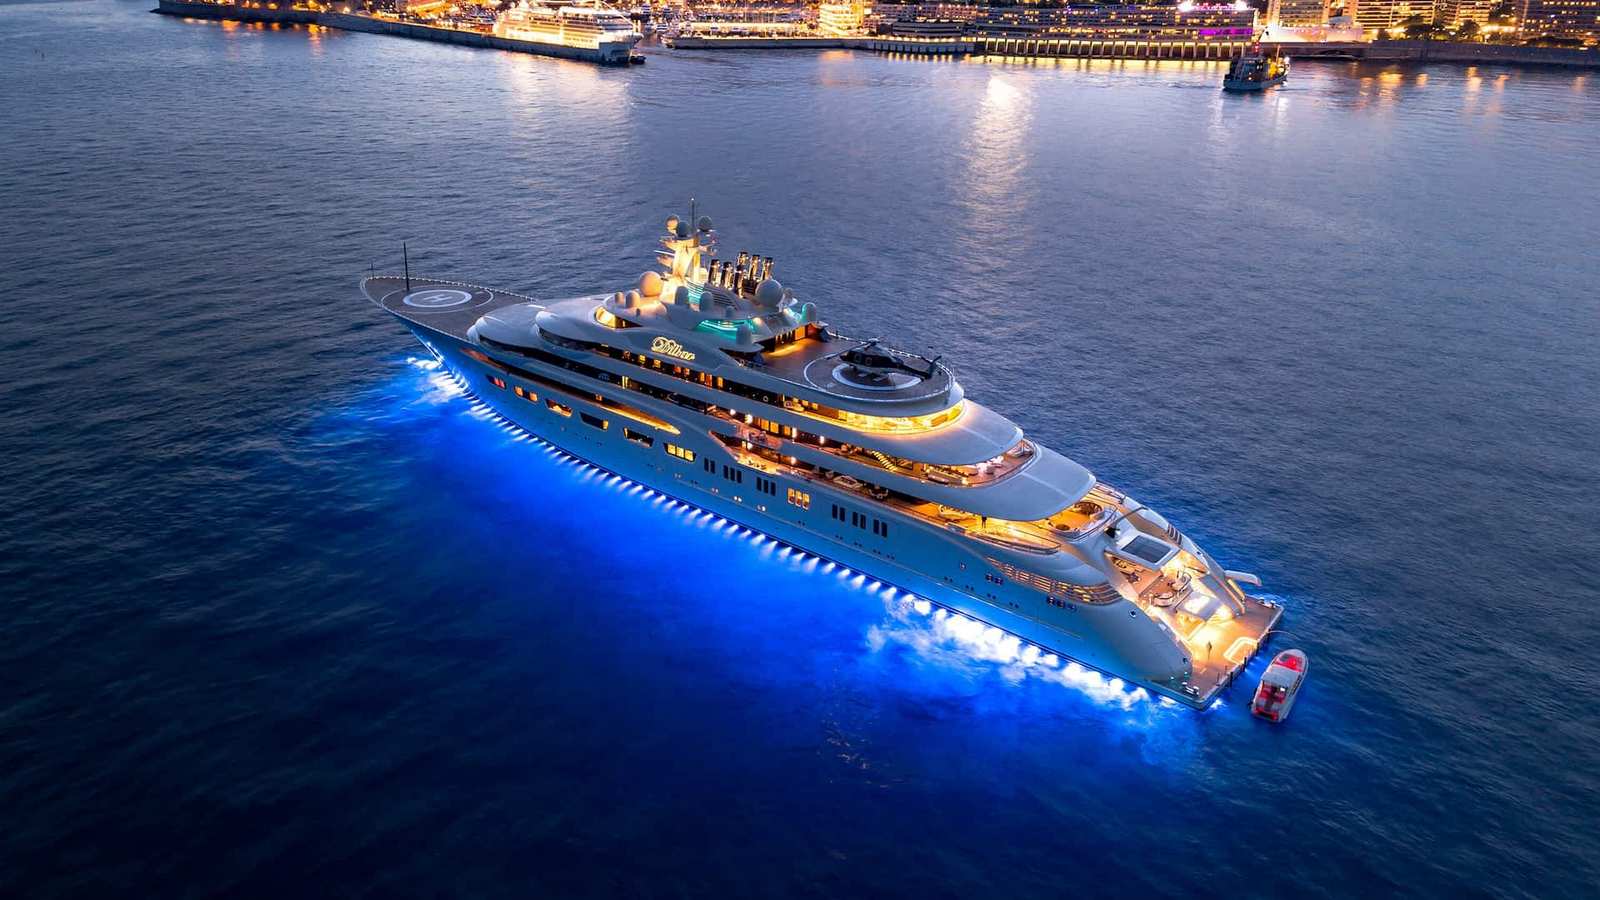 russian luxury yachts seized